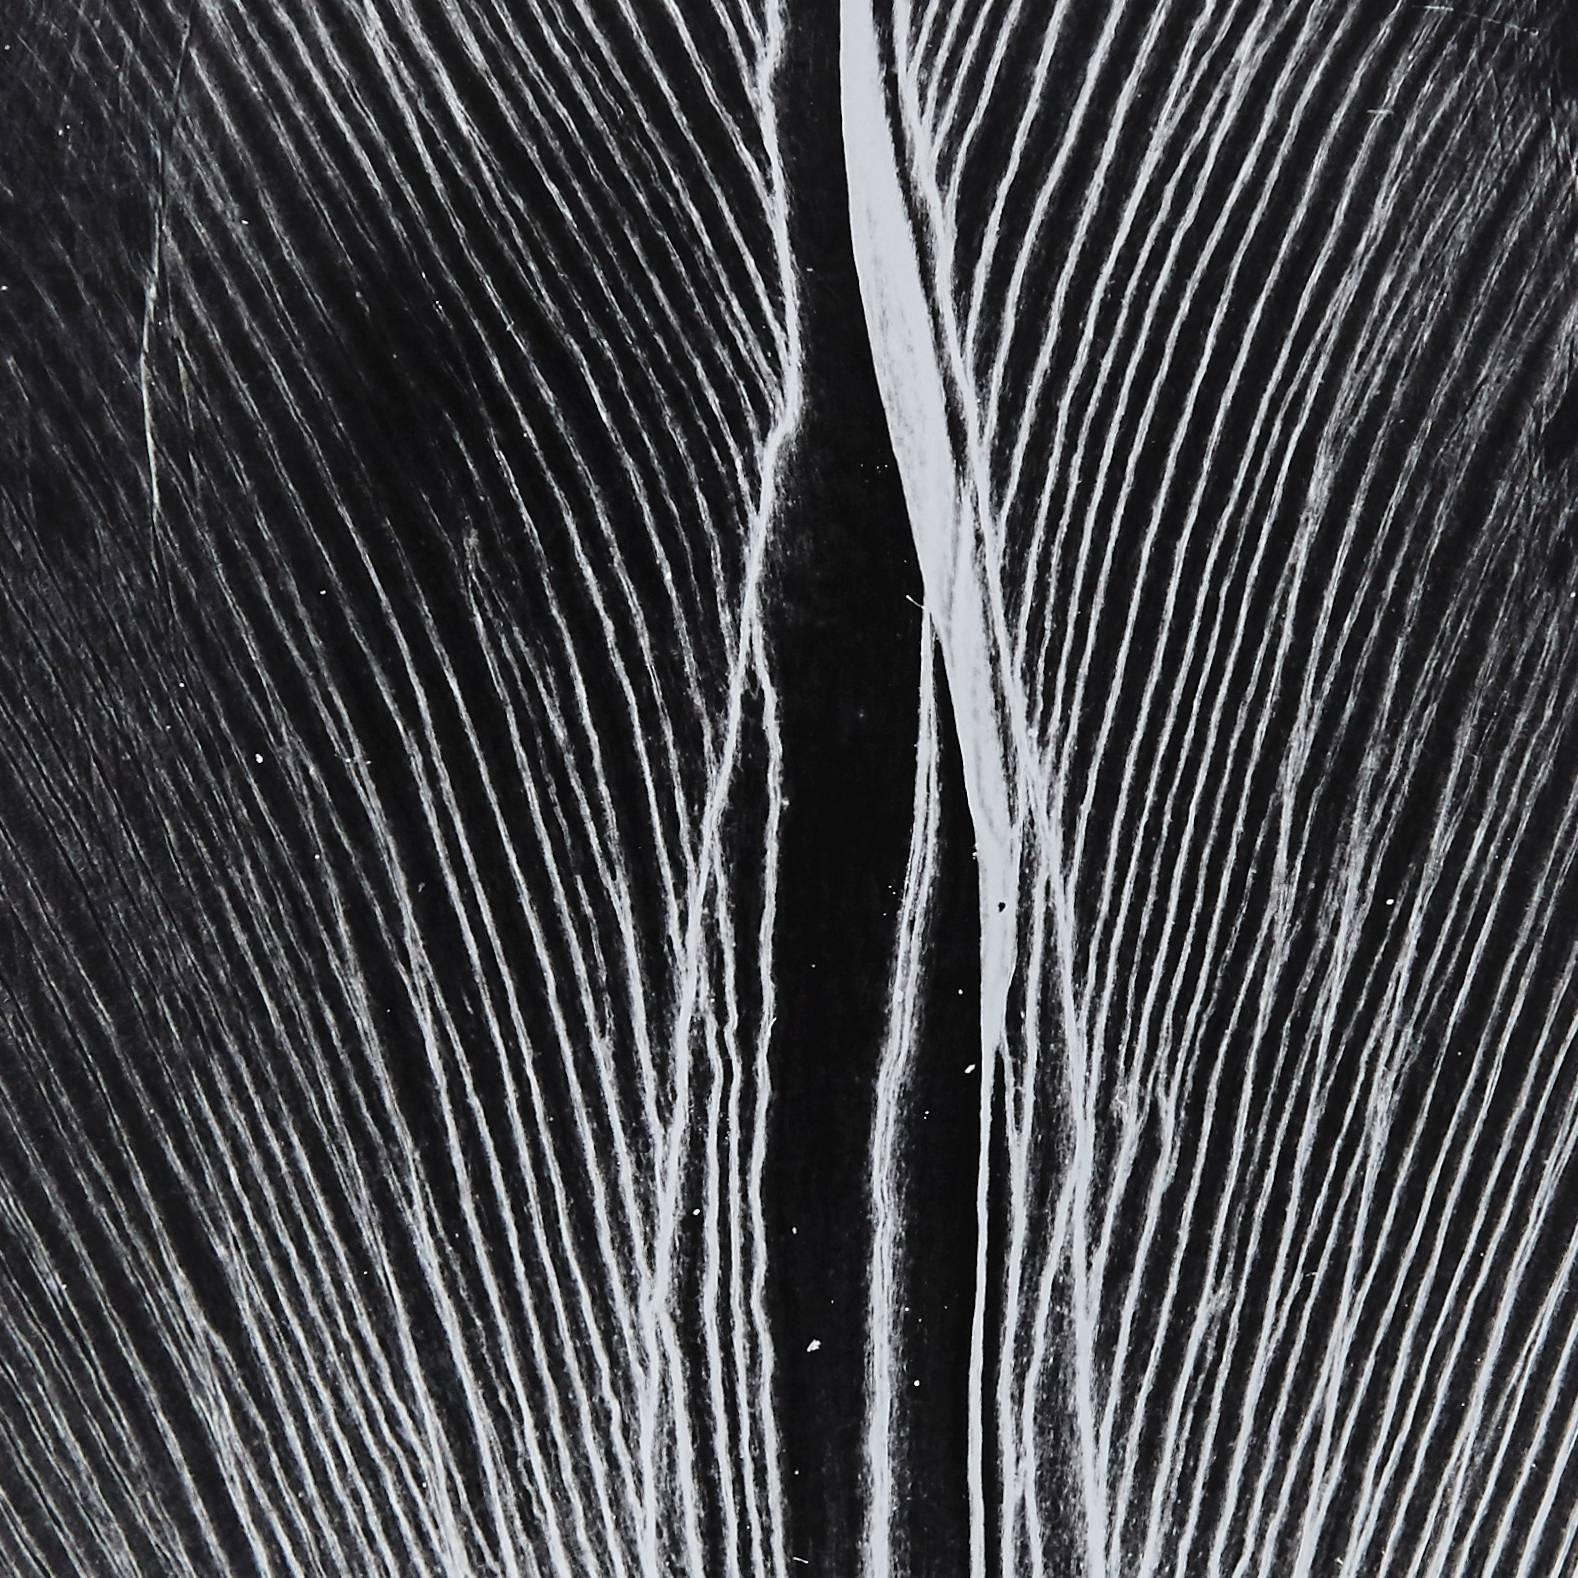 Photogram by Enrico Garzaro from the Flora series, 2015.